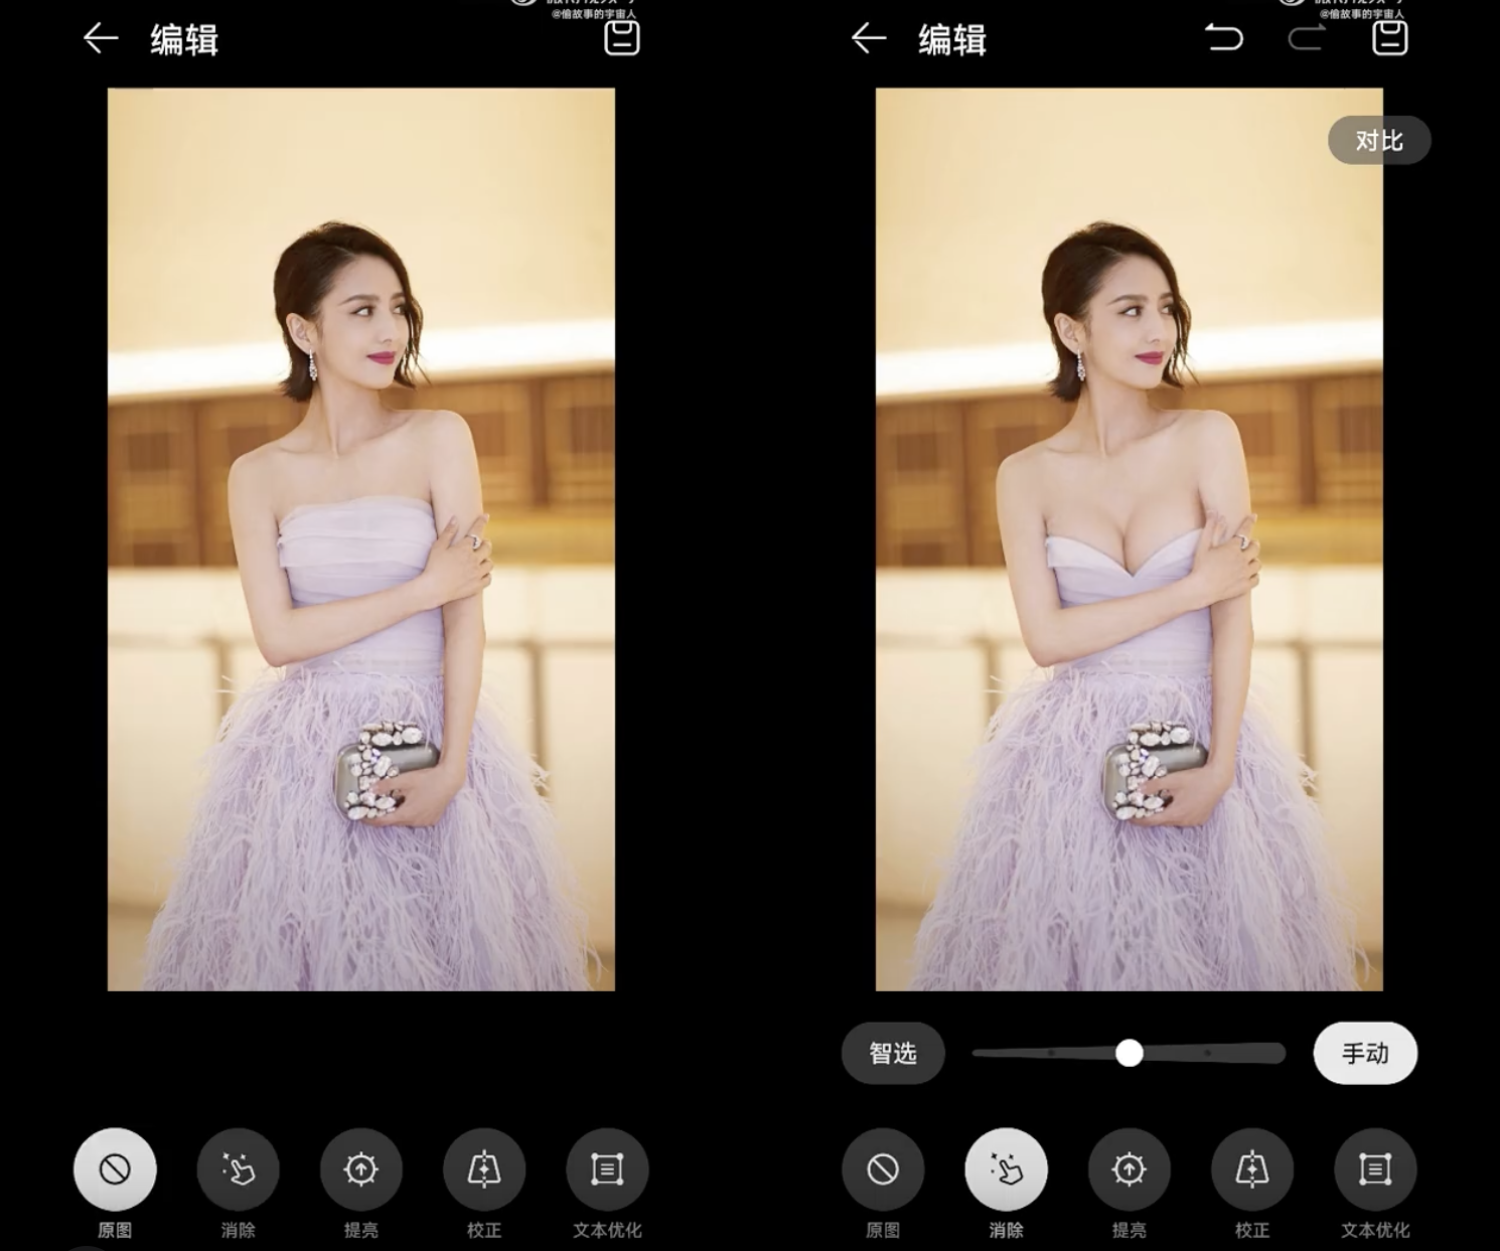 В смартфоне Huawei Pura 70 нашли неанонсированную функцию раздевания людей на фото2